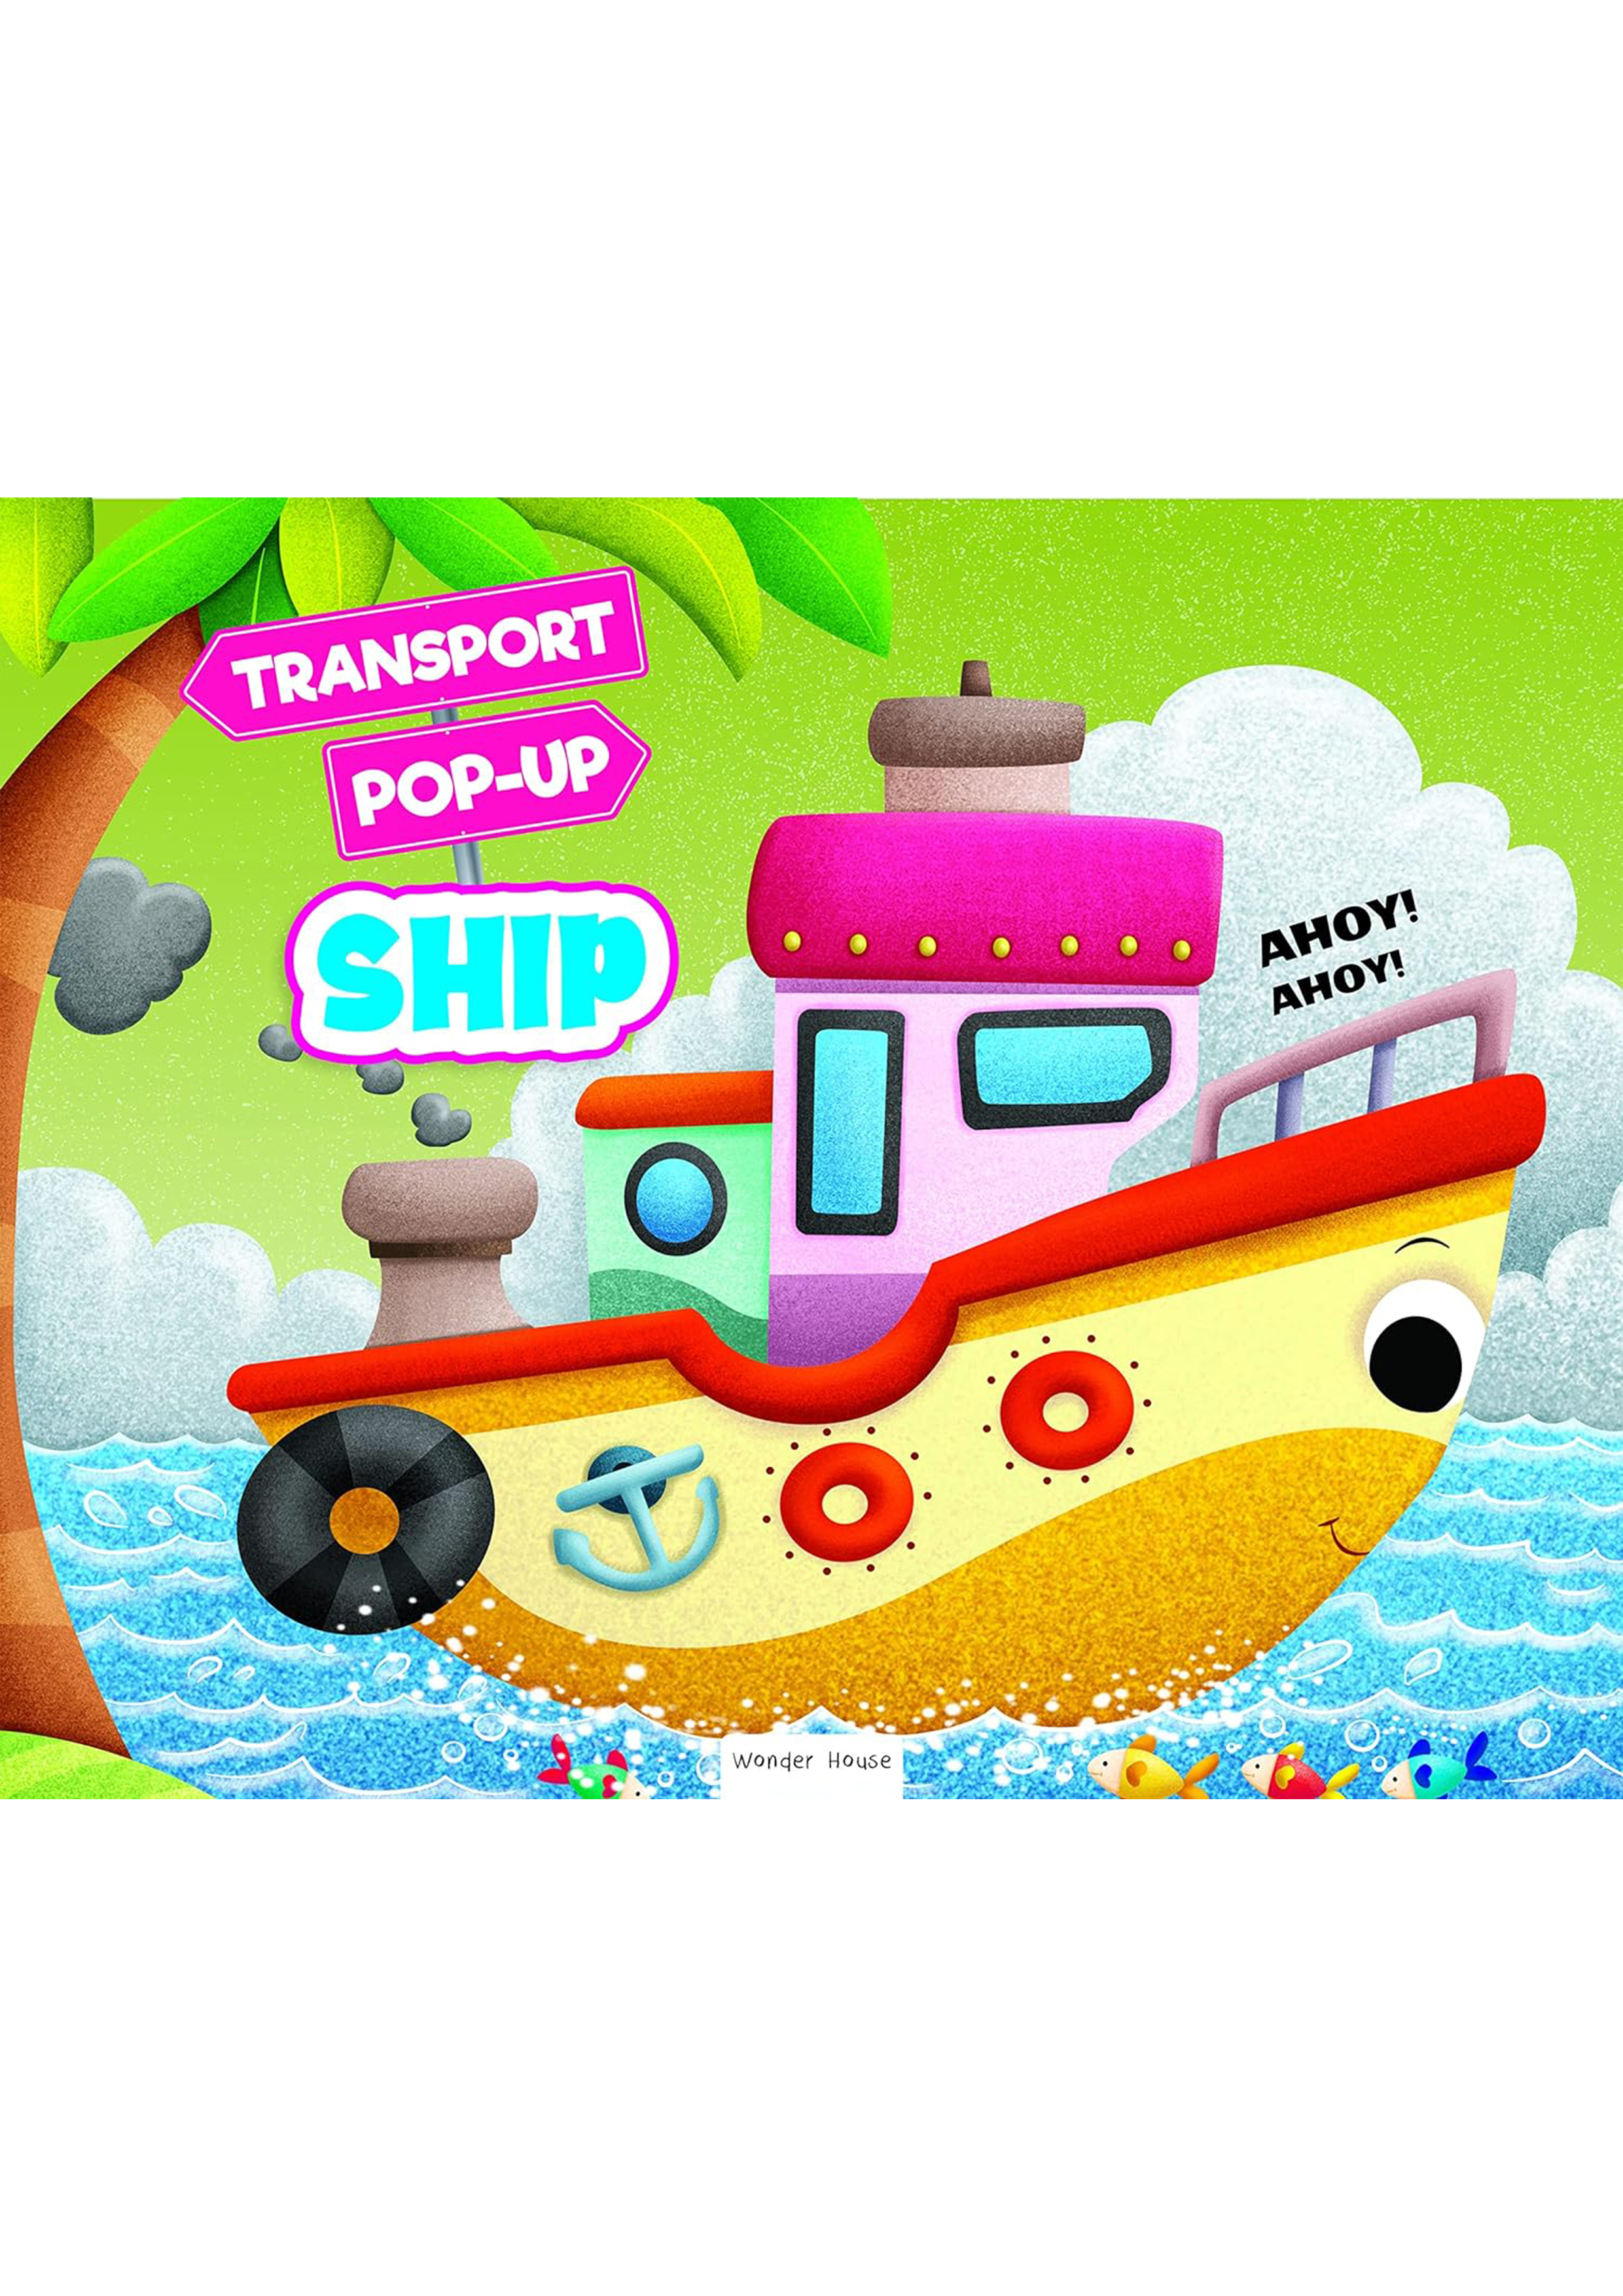 Pop-up Transport - Ship